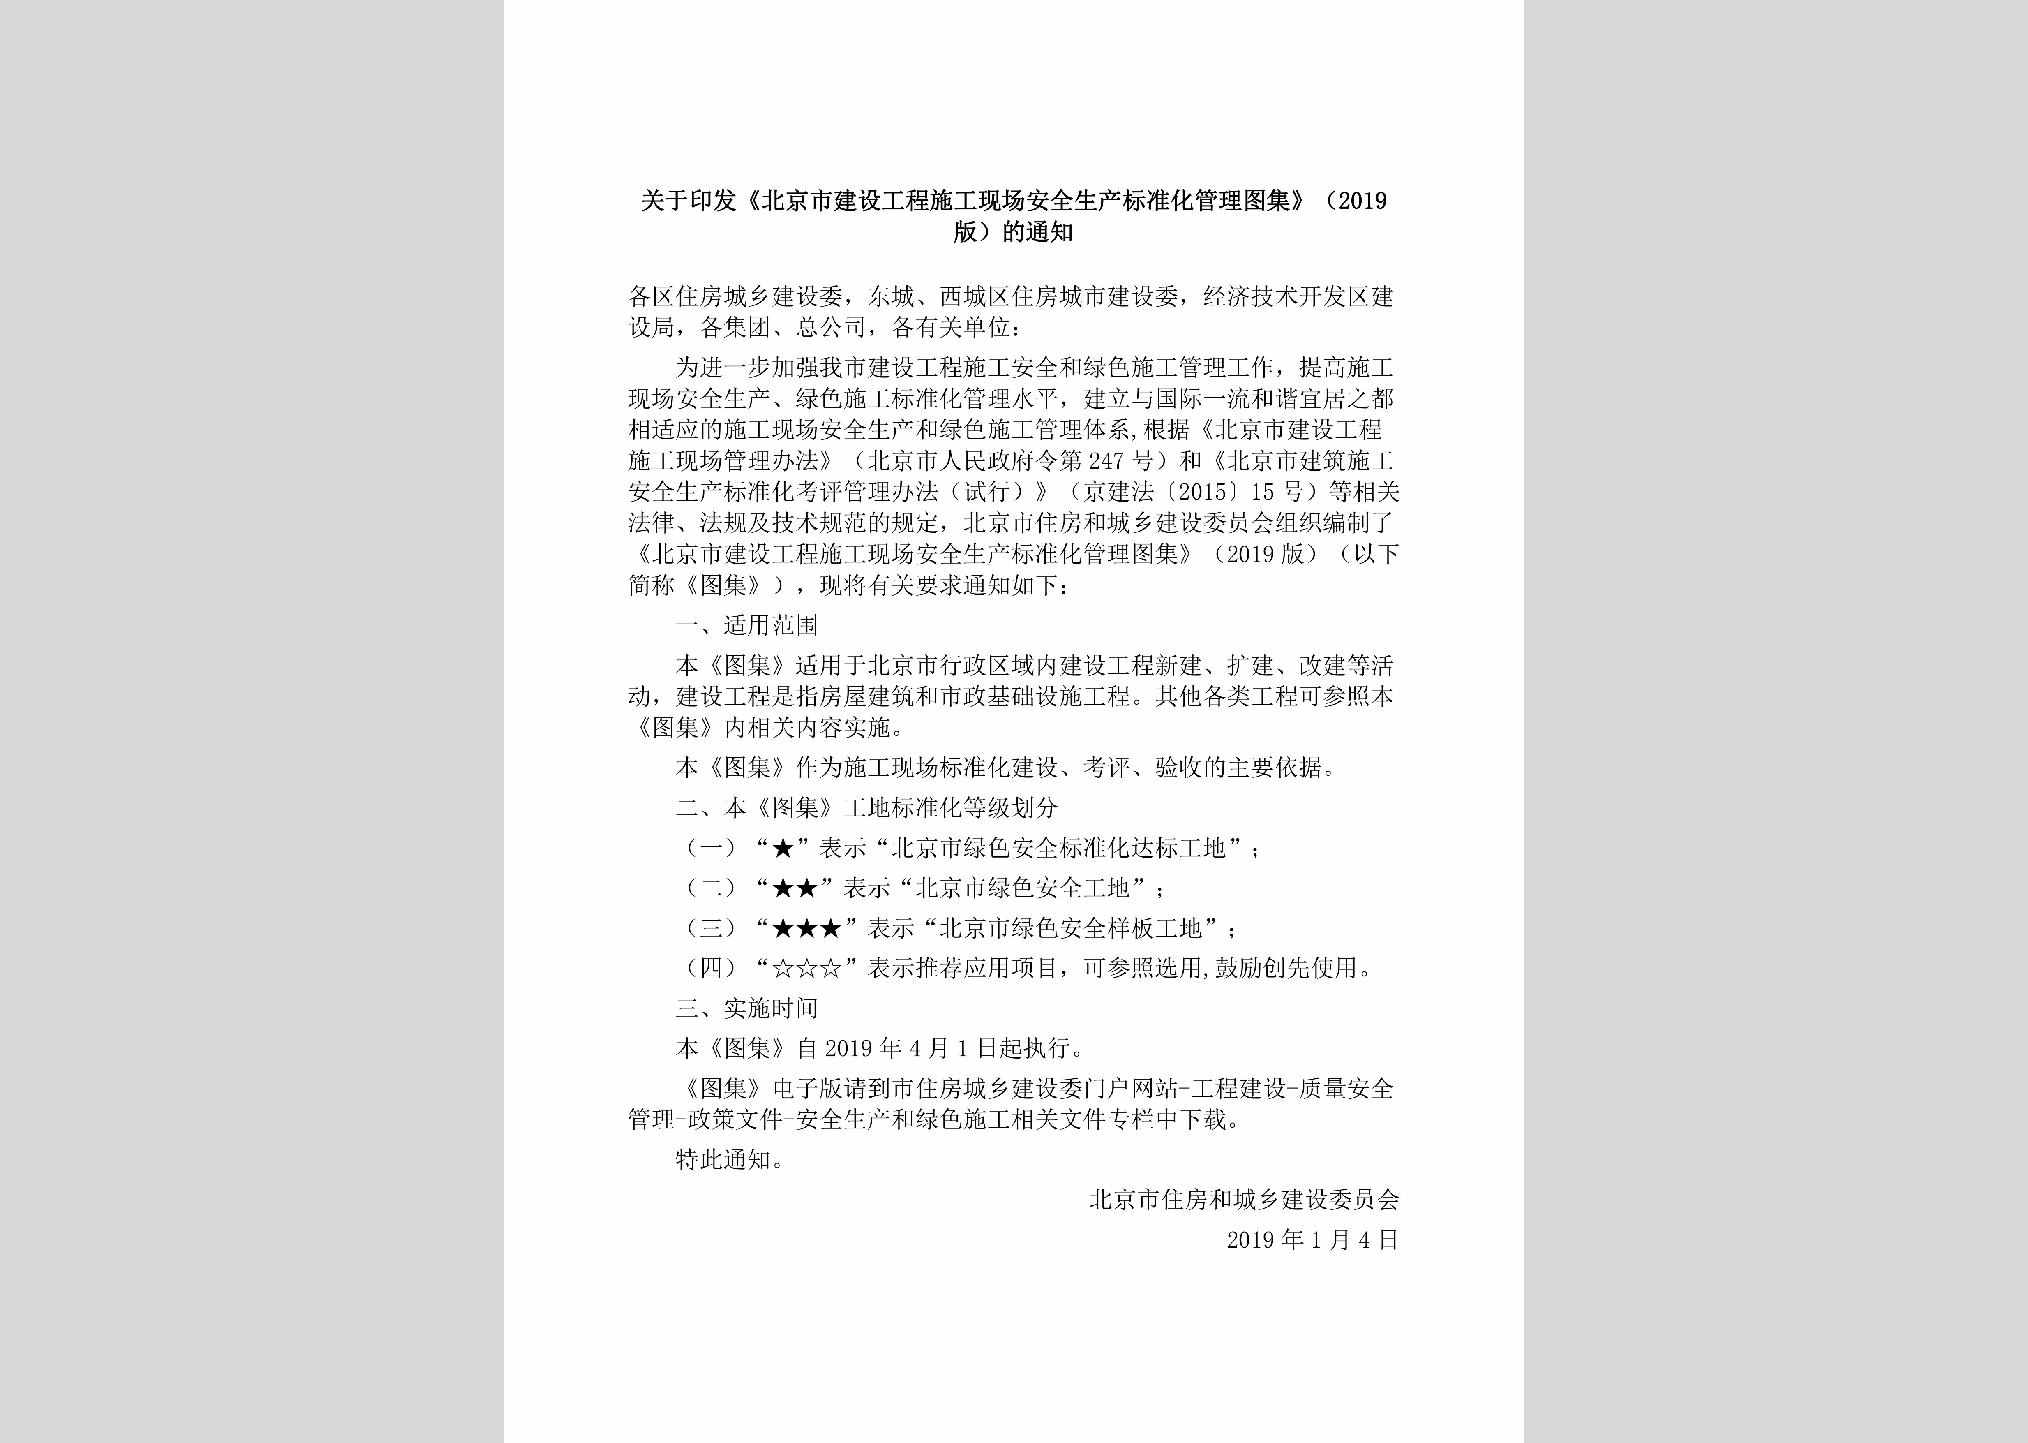 BJ-SGXCAQSC-2019：关于印发《北京市建设工程施工现场安全生产标准化管理图集》（2019版）的通知